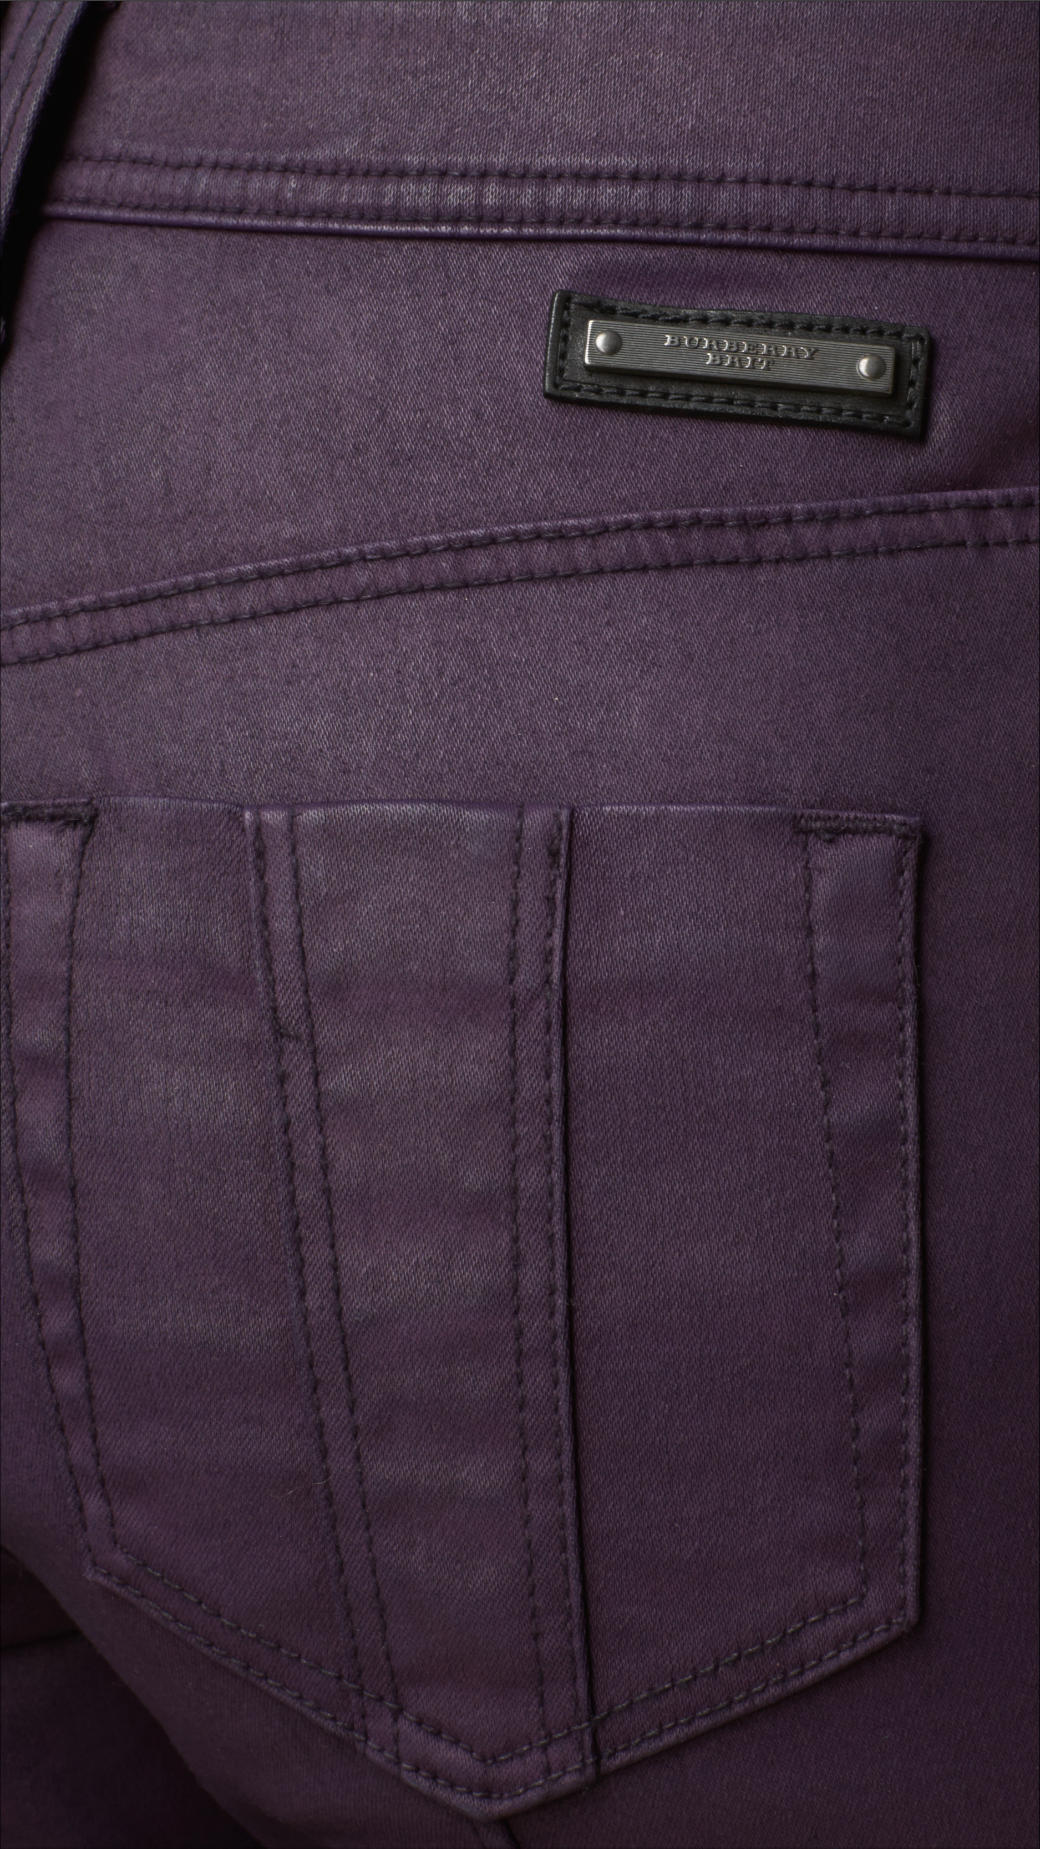 burberry jeans purple